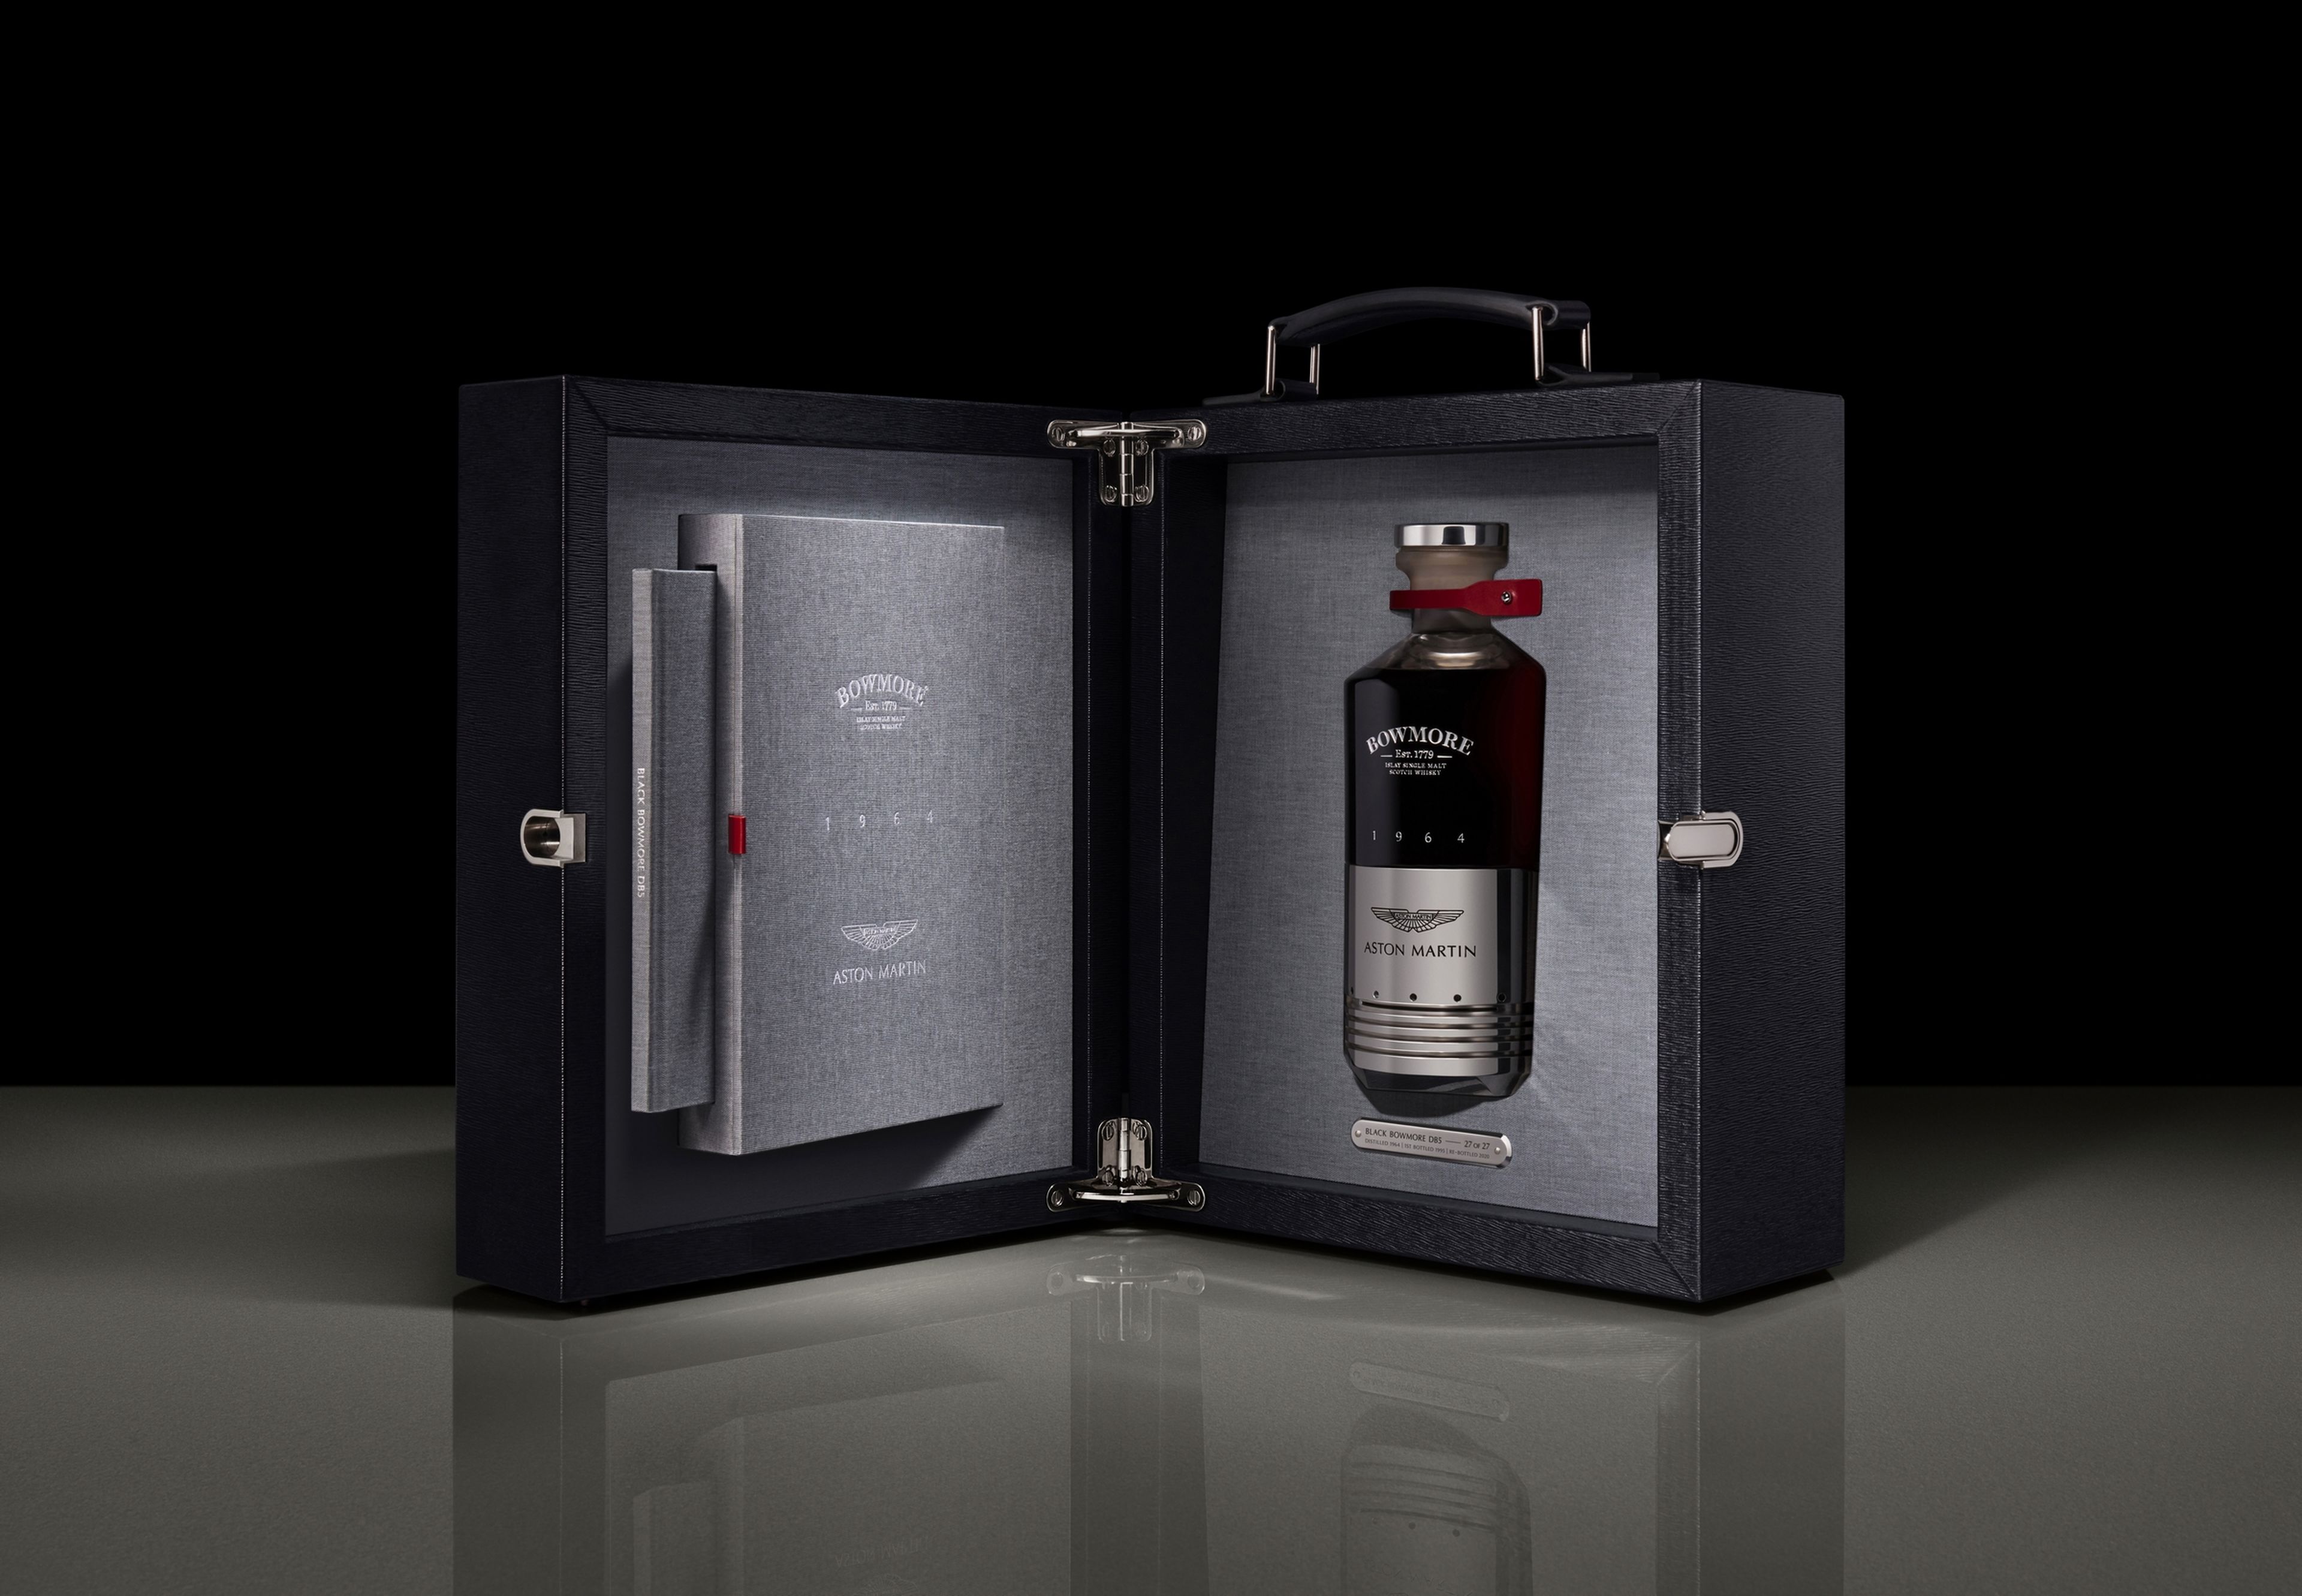 La botella de whisky hecha con pistón de Aston Martin que cuesta 55.000 euros